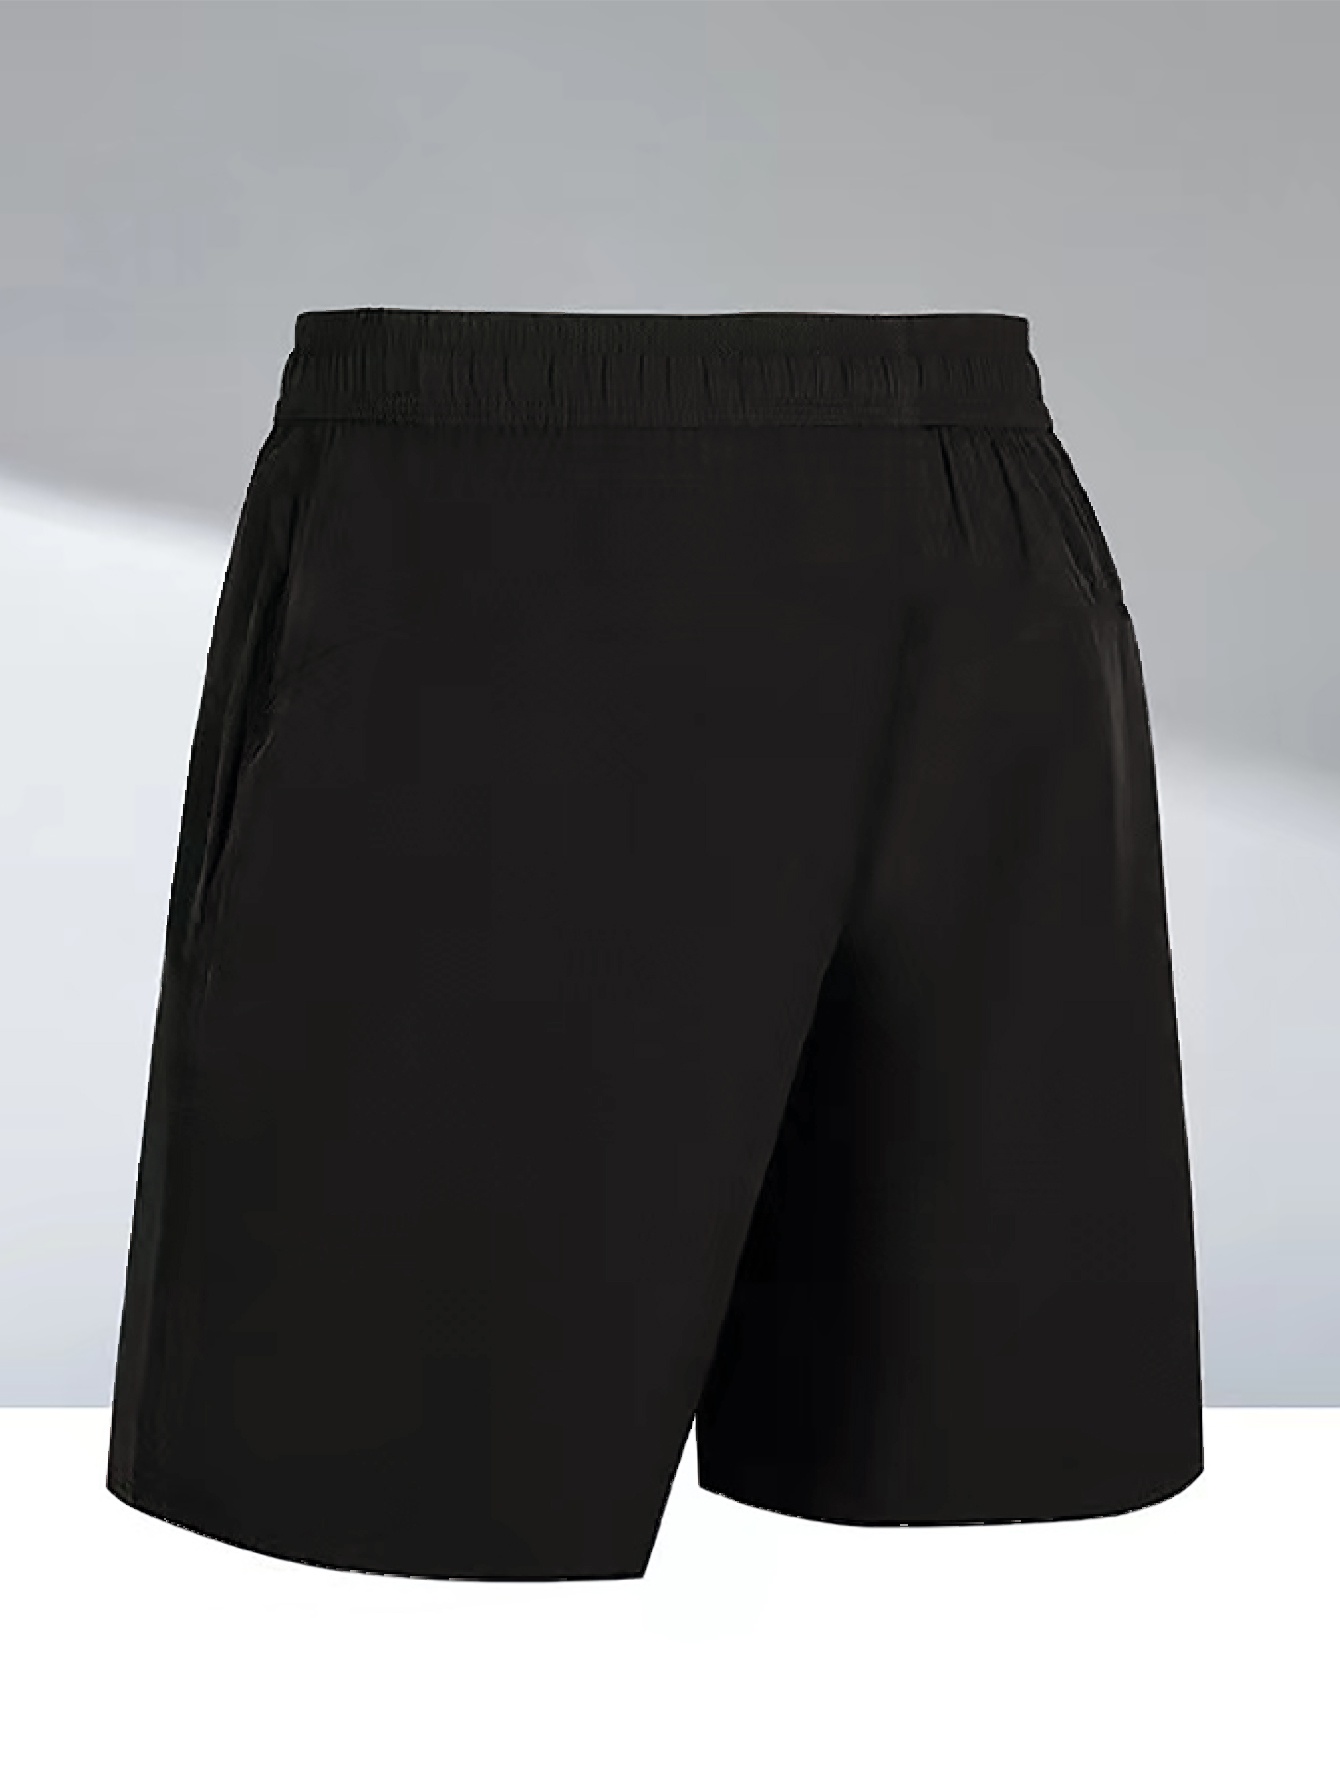 8330 - Cotton Spandex Short Shorts  Spandex shorts, Women short skirt,  Clothes